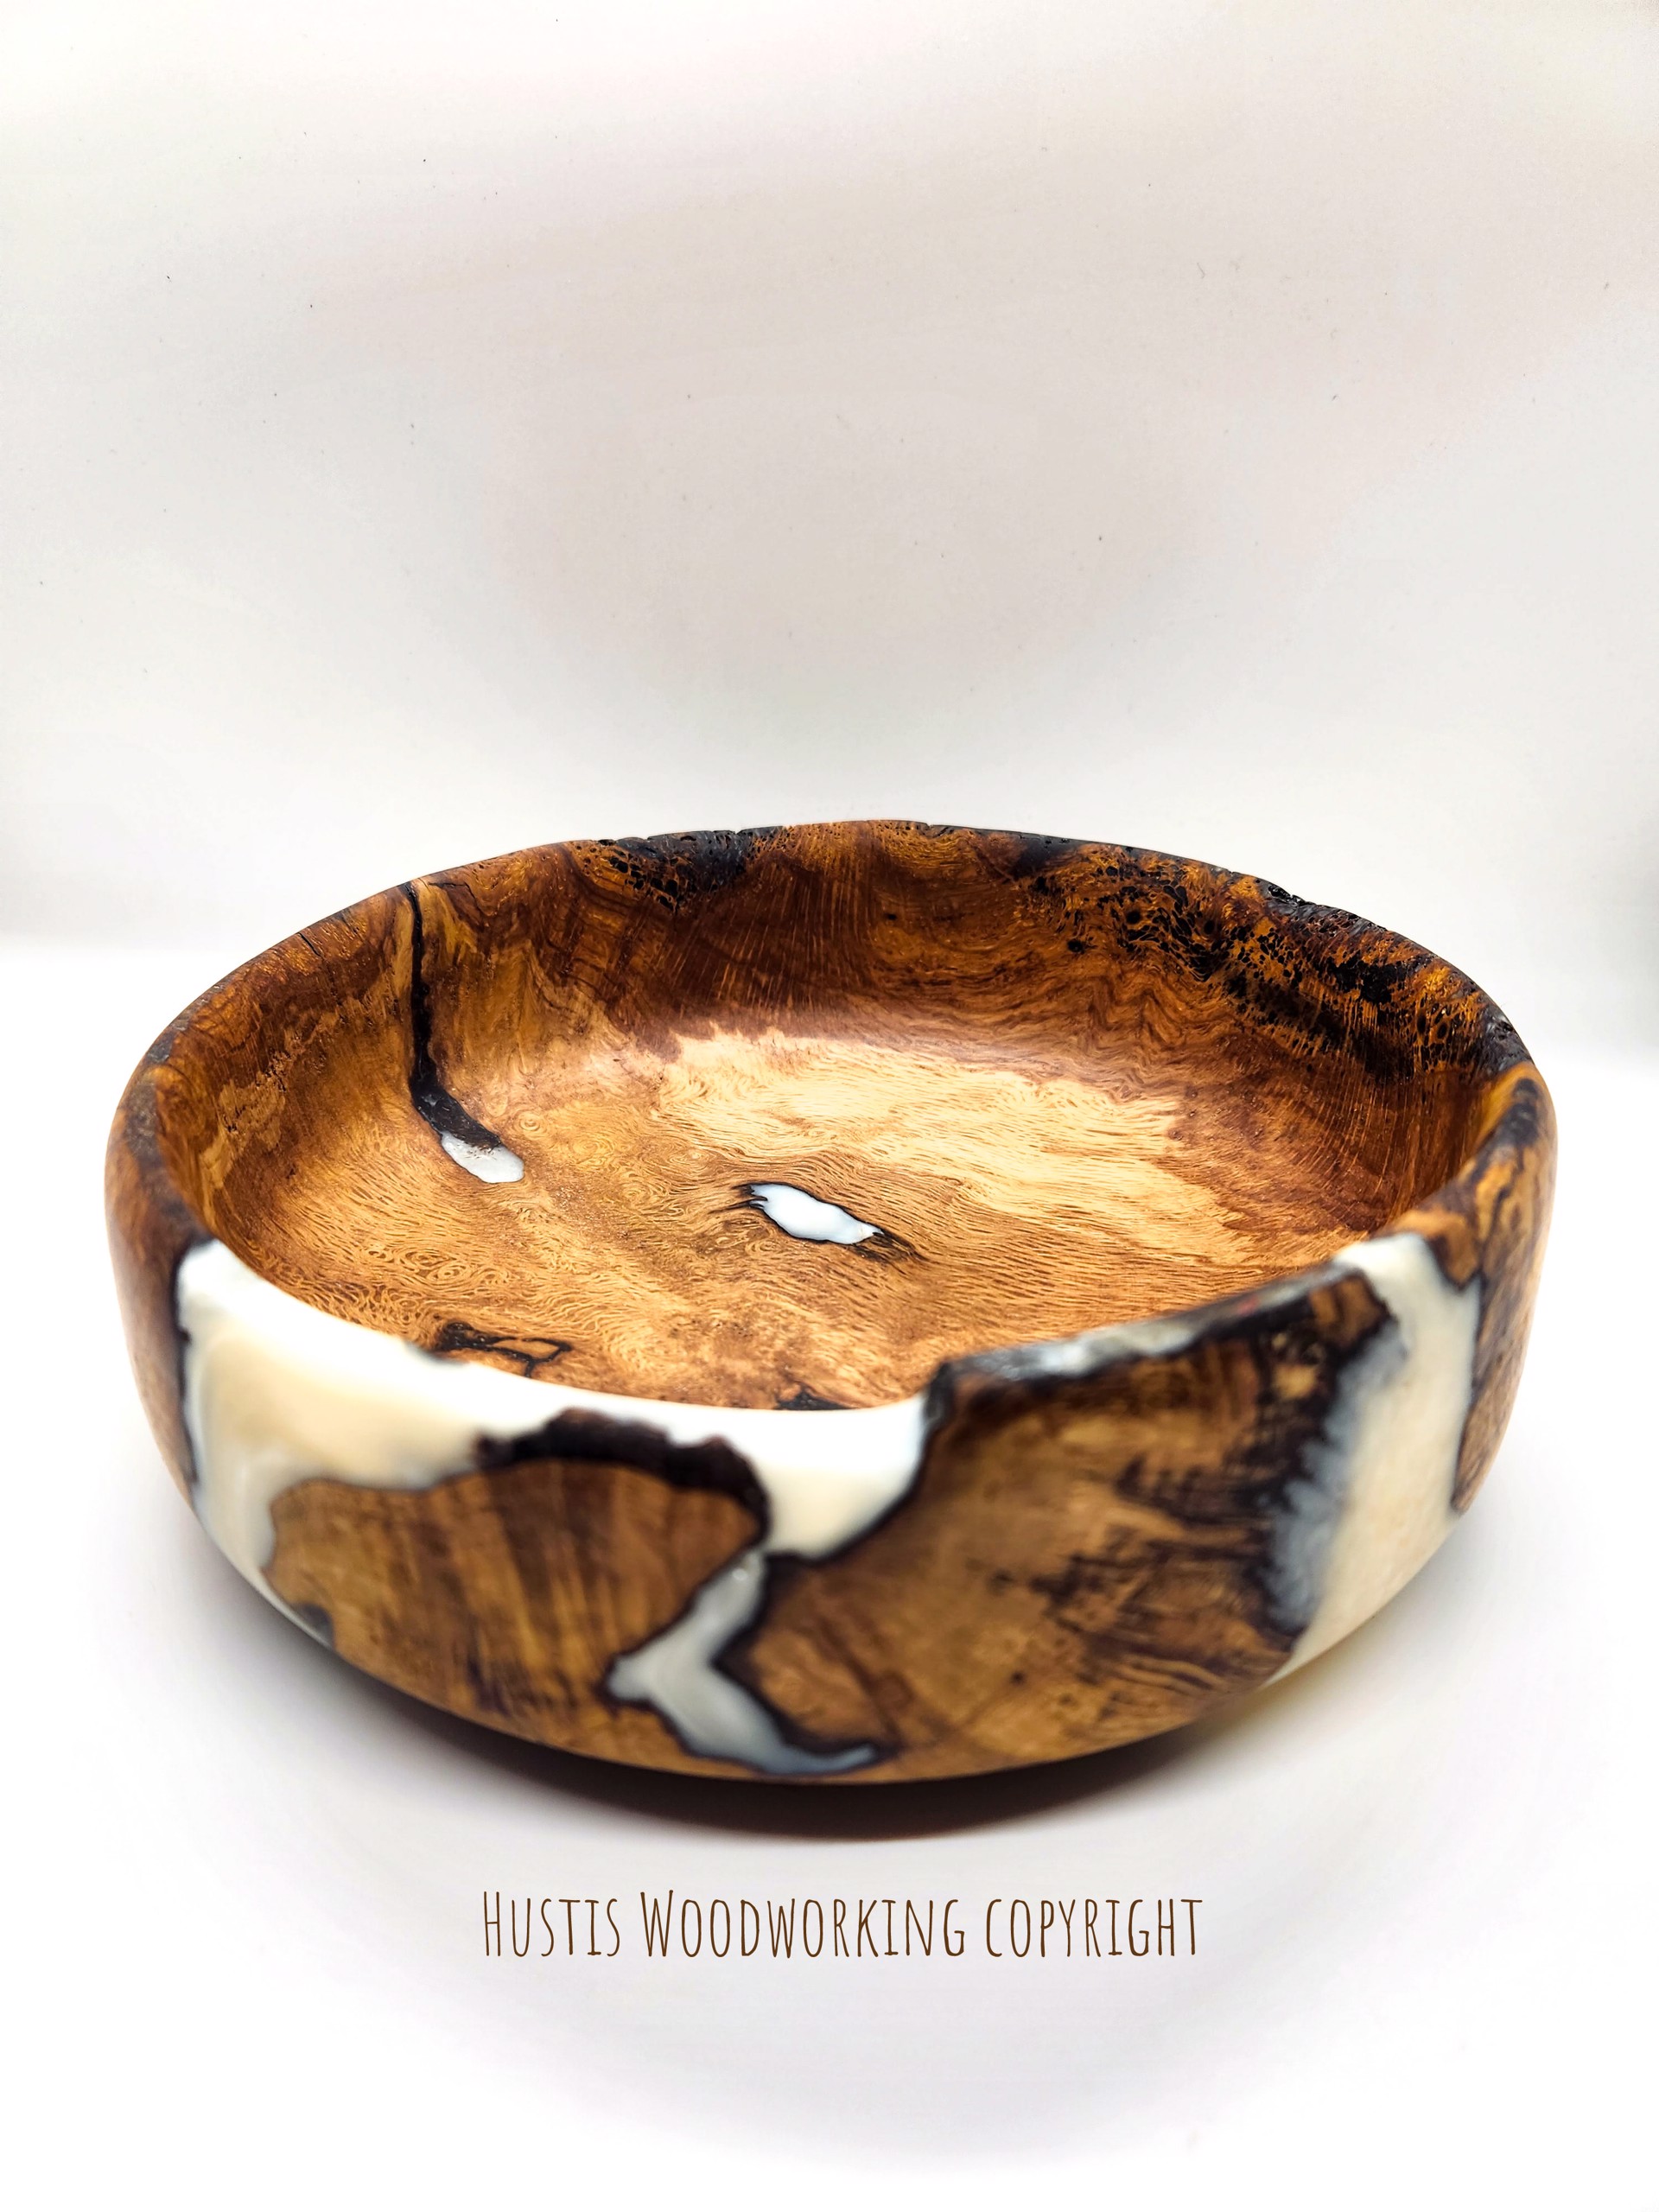 Oak Burl Bowl with White Epoxy by Mark Hustis